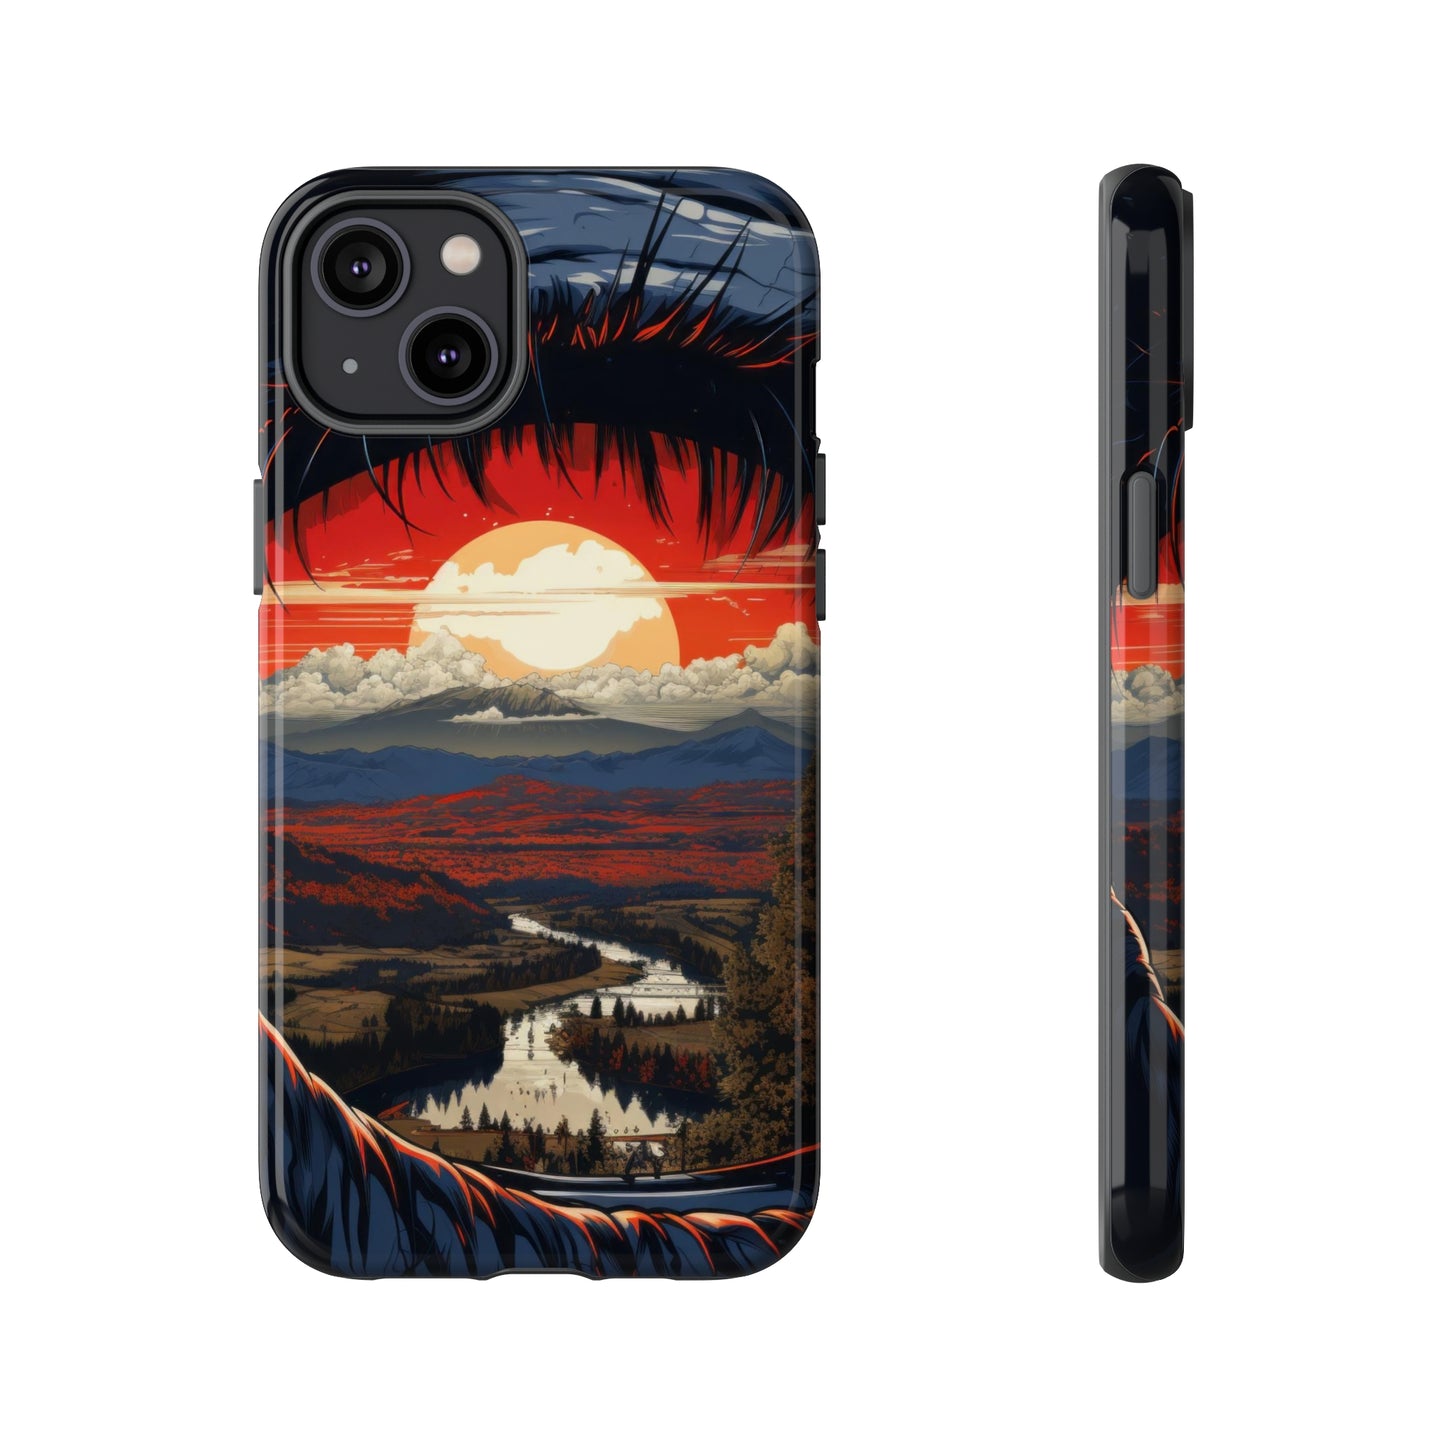 Dawn's Gaze: Sunrise Mountain Reflection in Eye Phone Case for iPhone, Samsung, Pixel